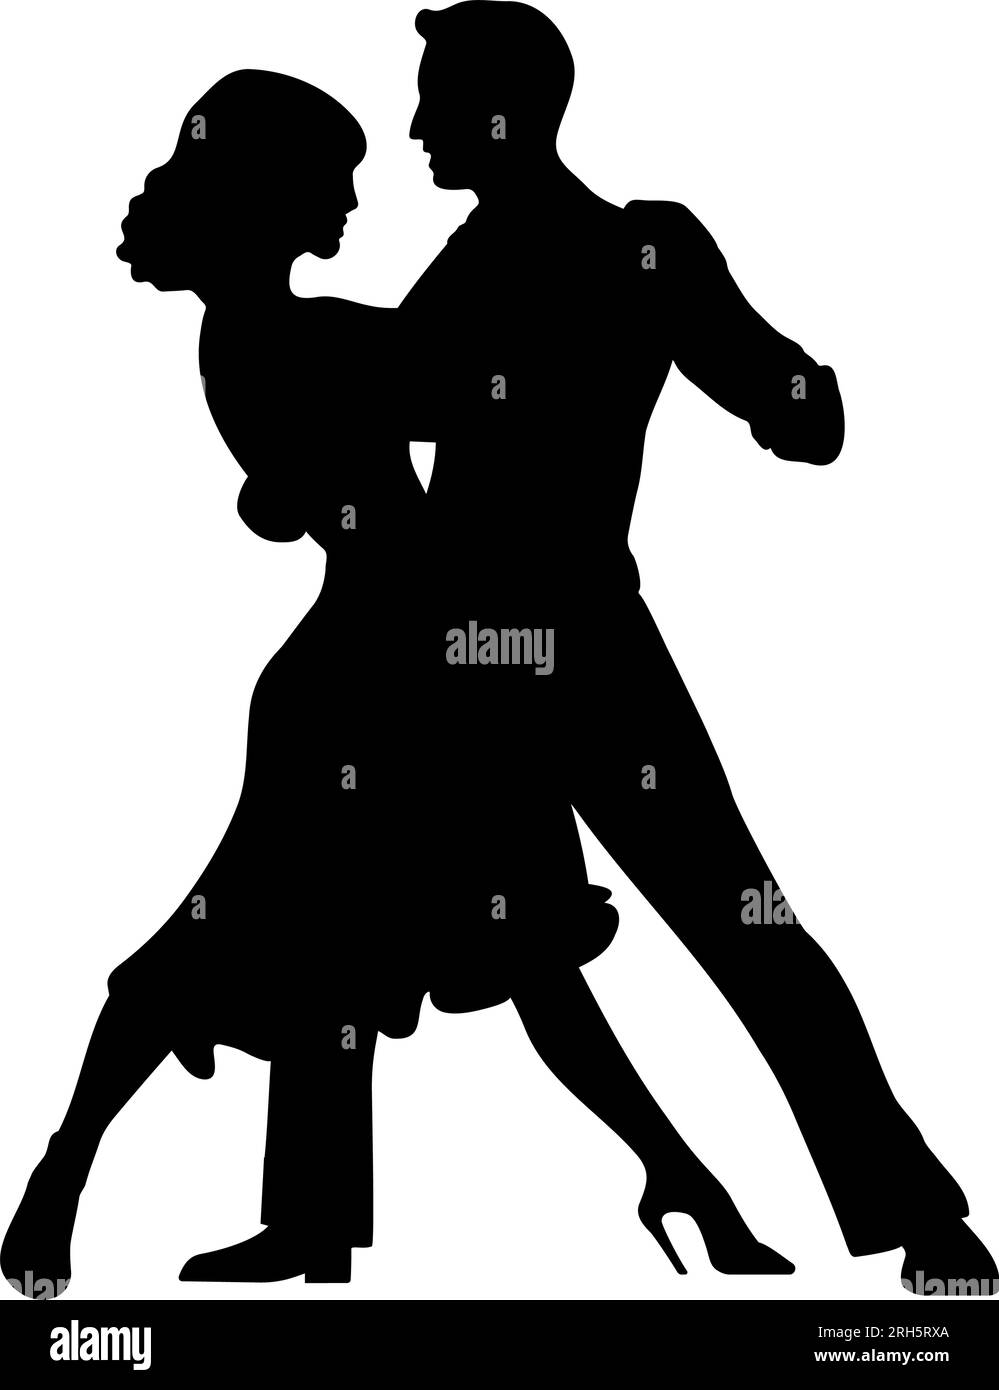 Couple dancing silhouette. Vector illustration Stock Vector Image & Art ...